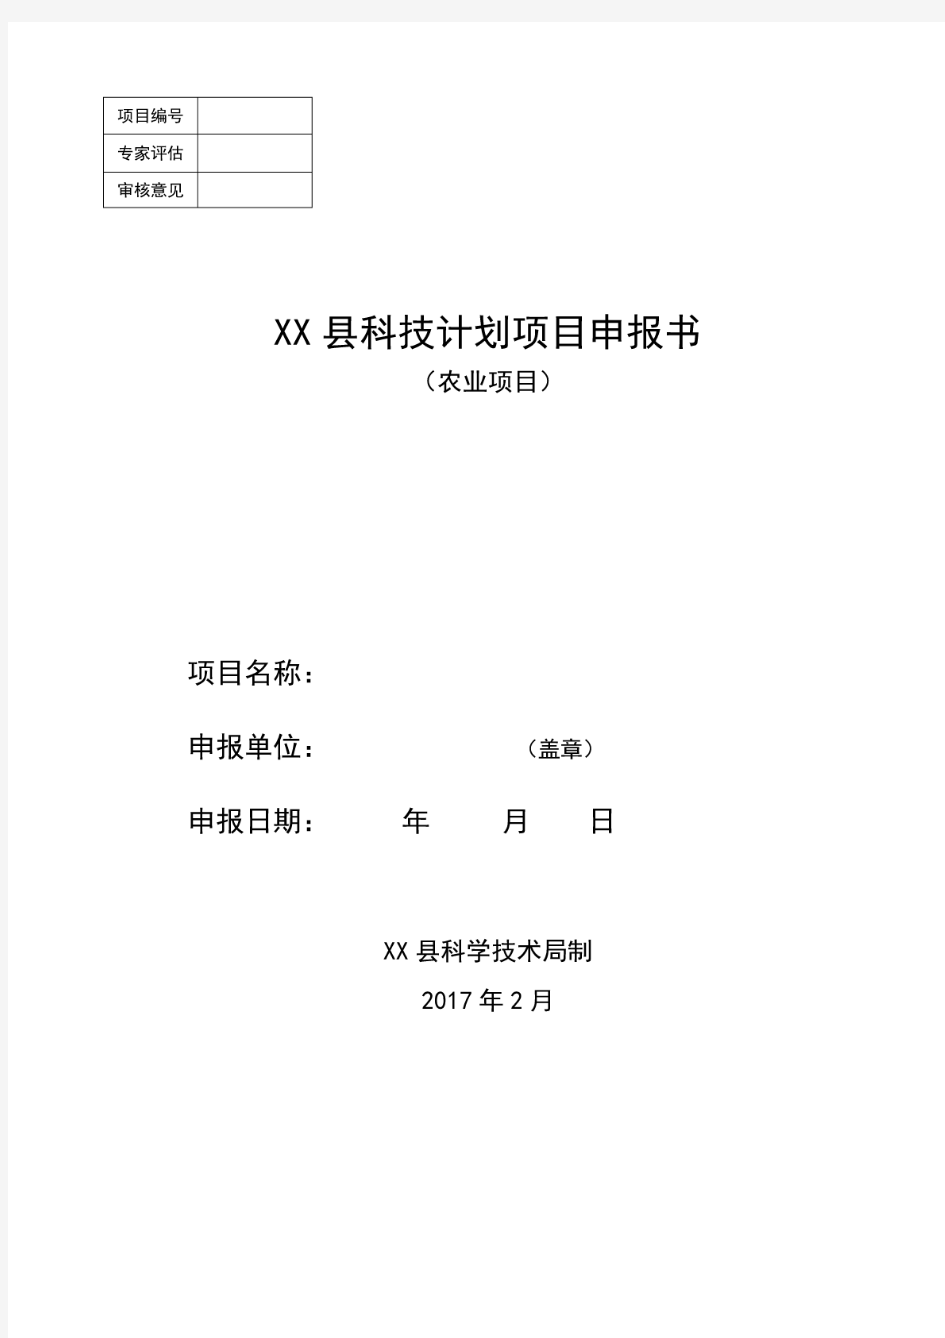 XX县科技计划项目申报书(农业项目)